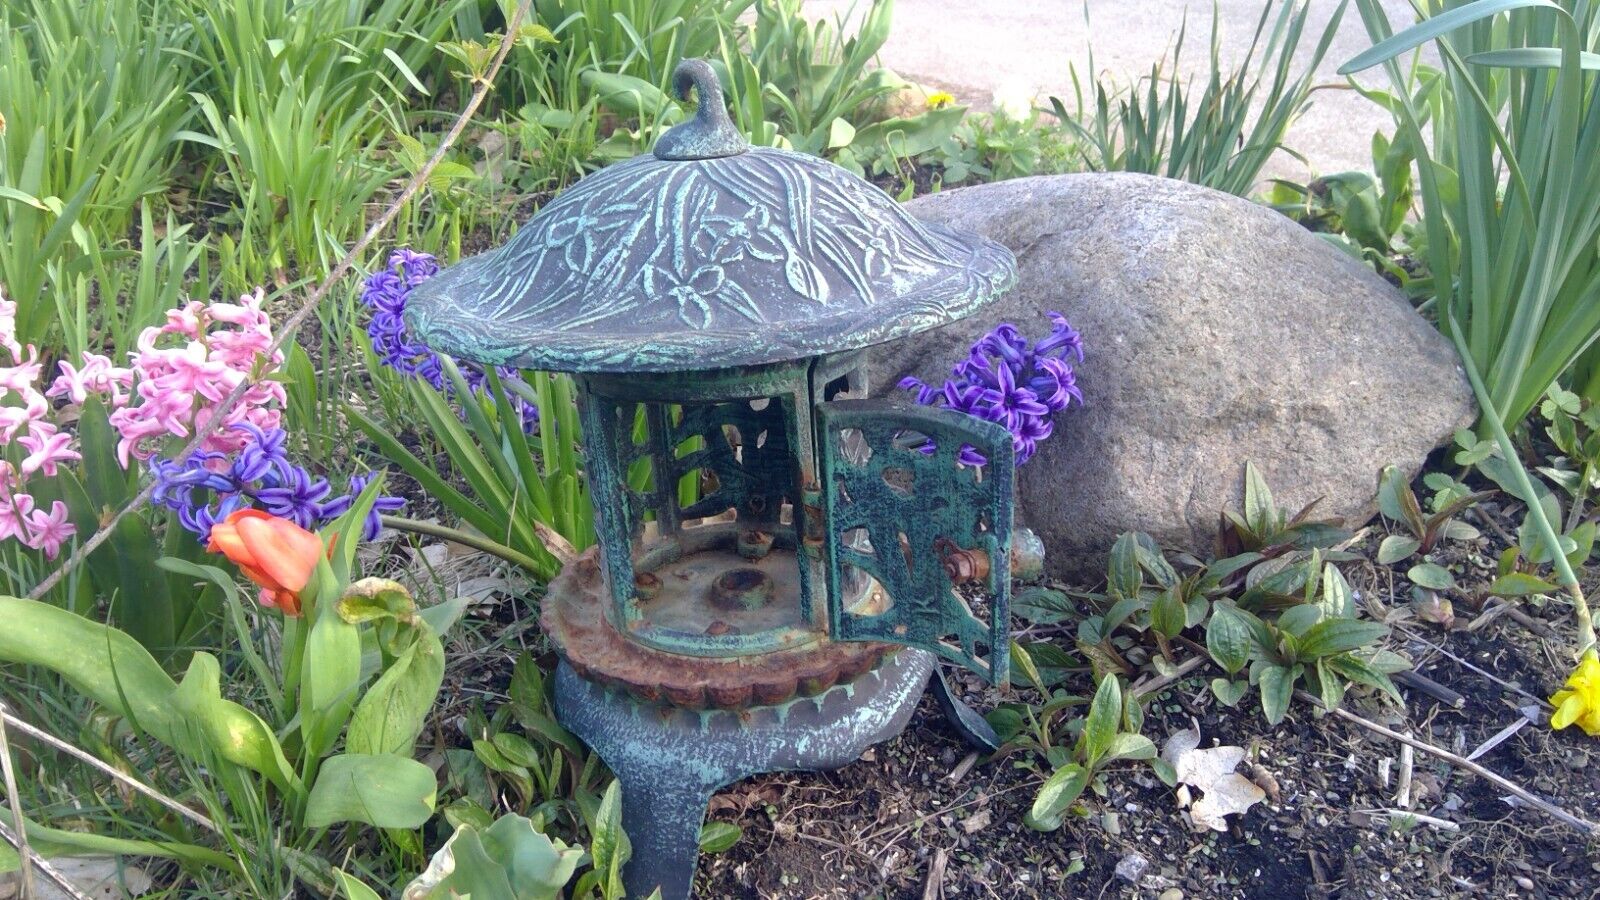 Iris Pagoda Garden Lantern, Japanese style, made in China, very rare.